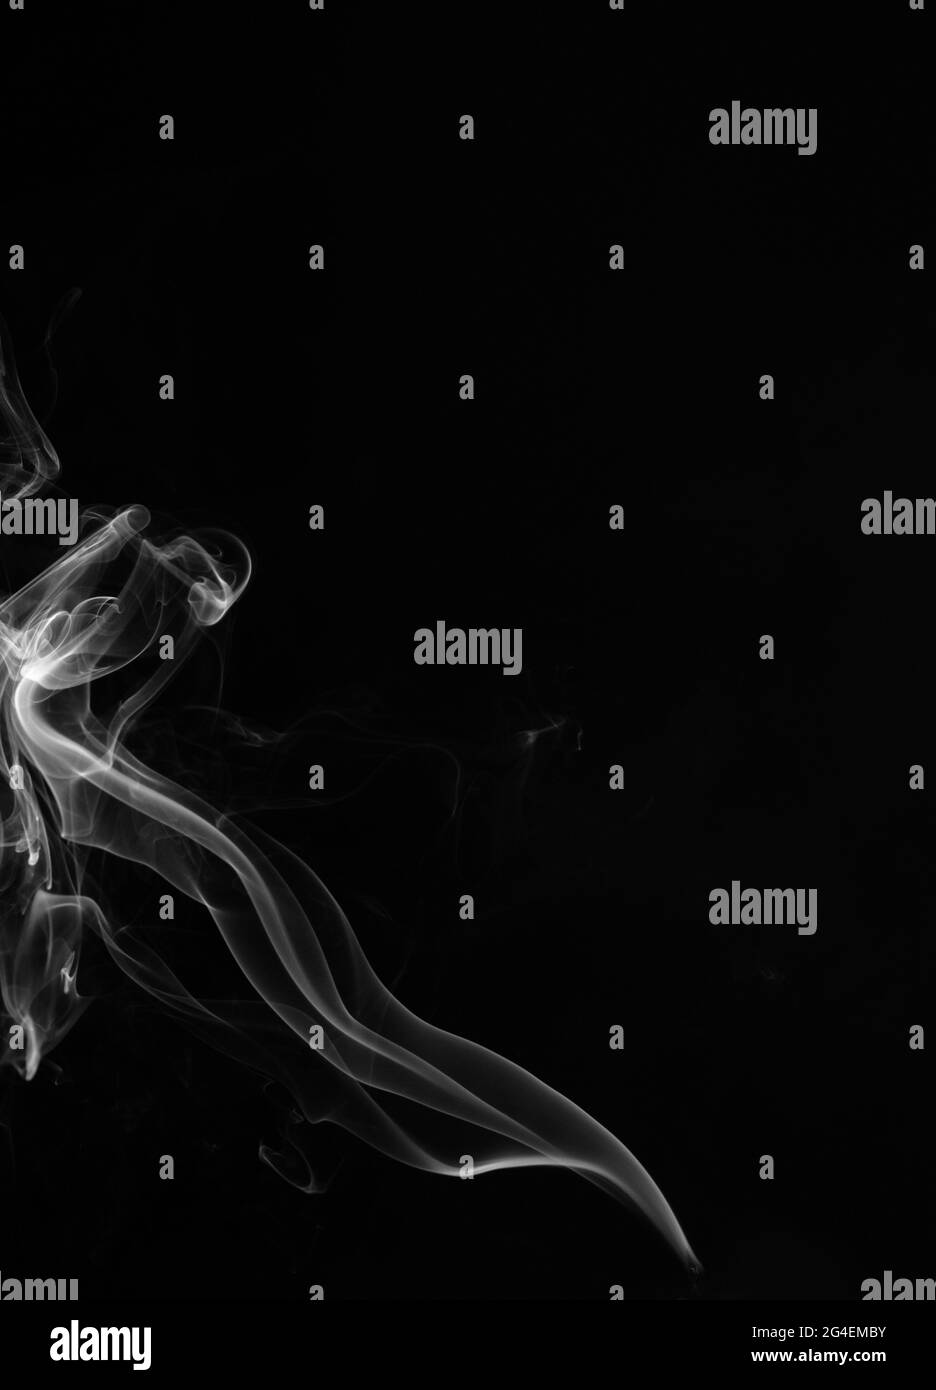 Smoke on a black background. Stock Photo